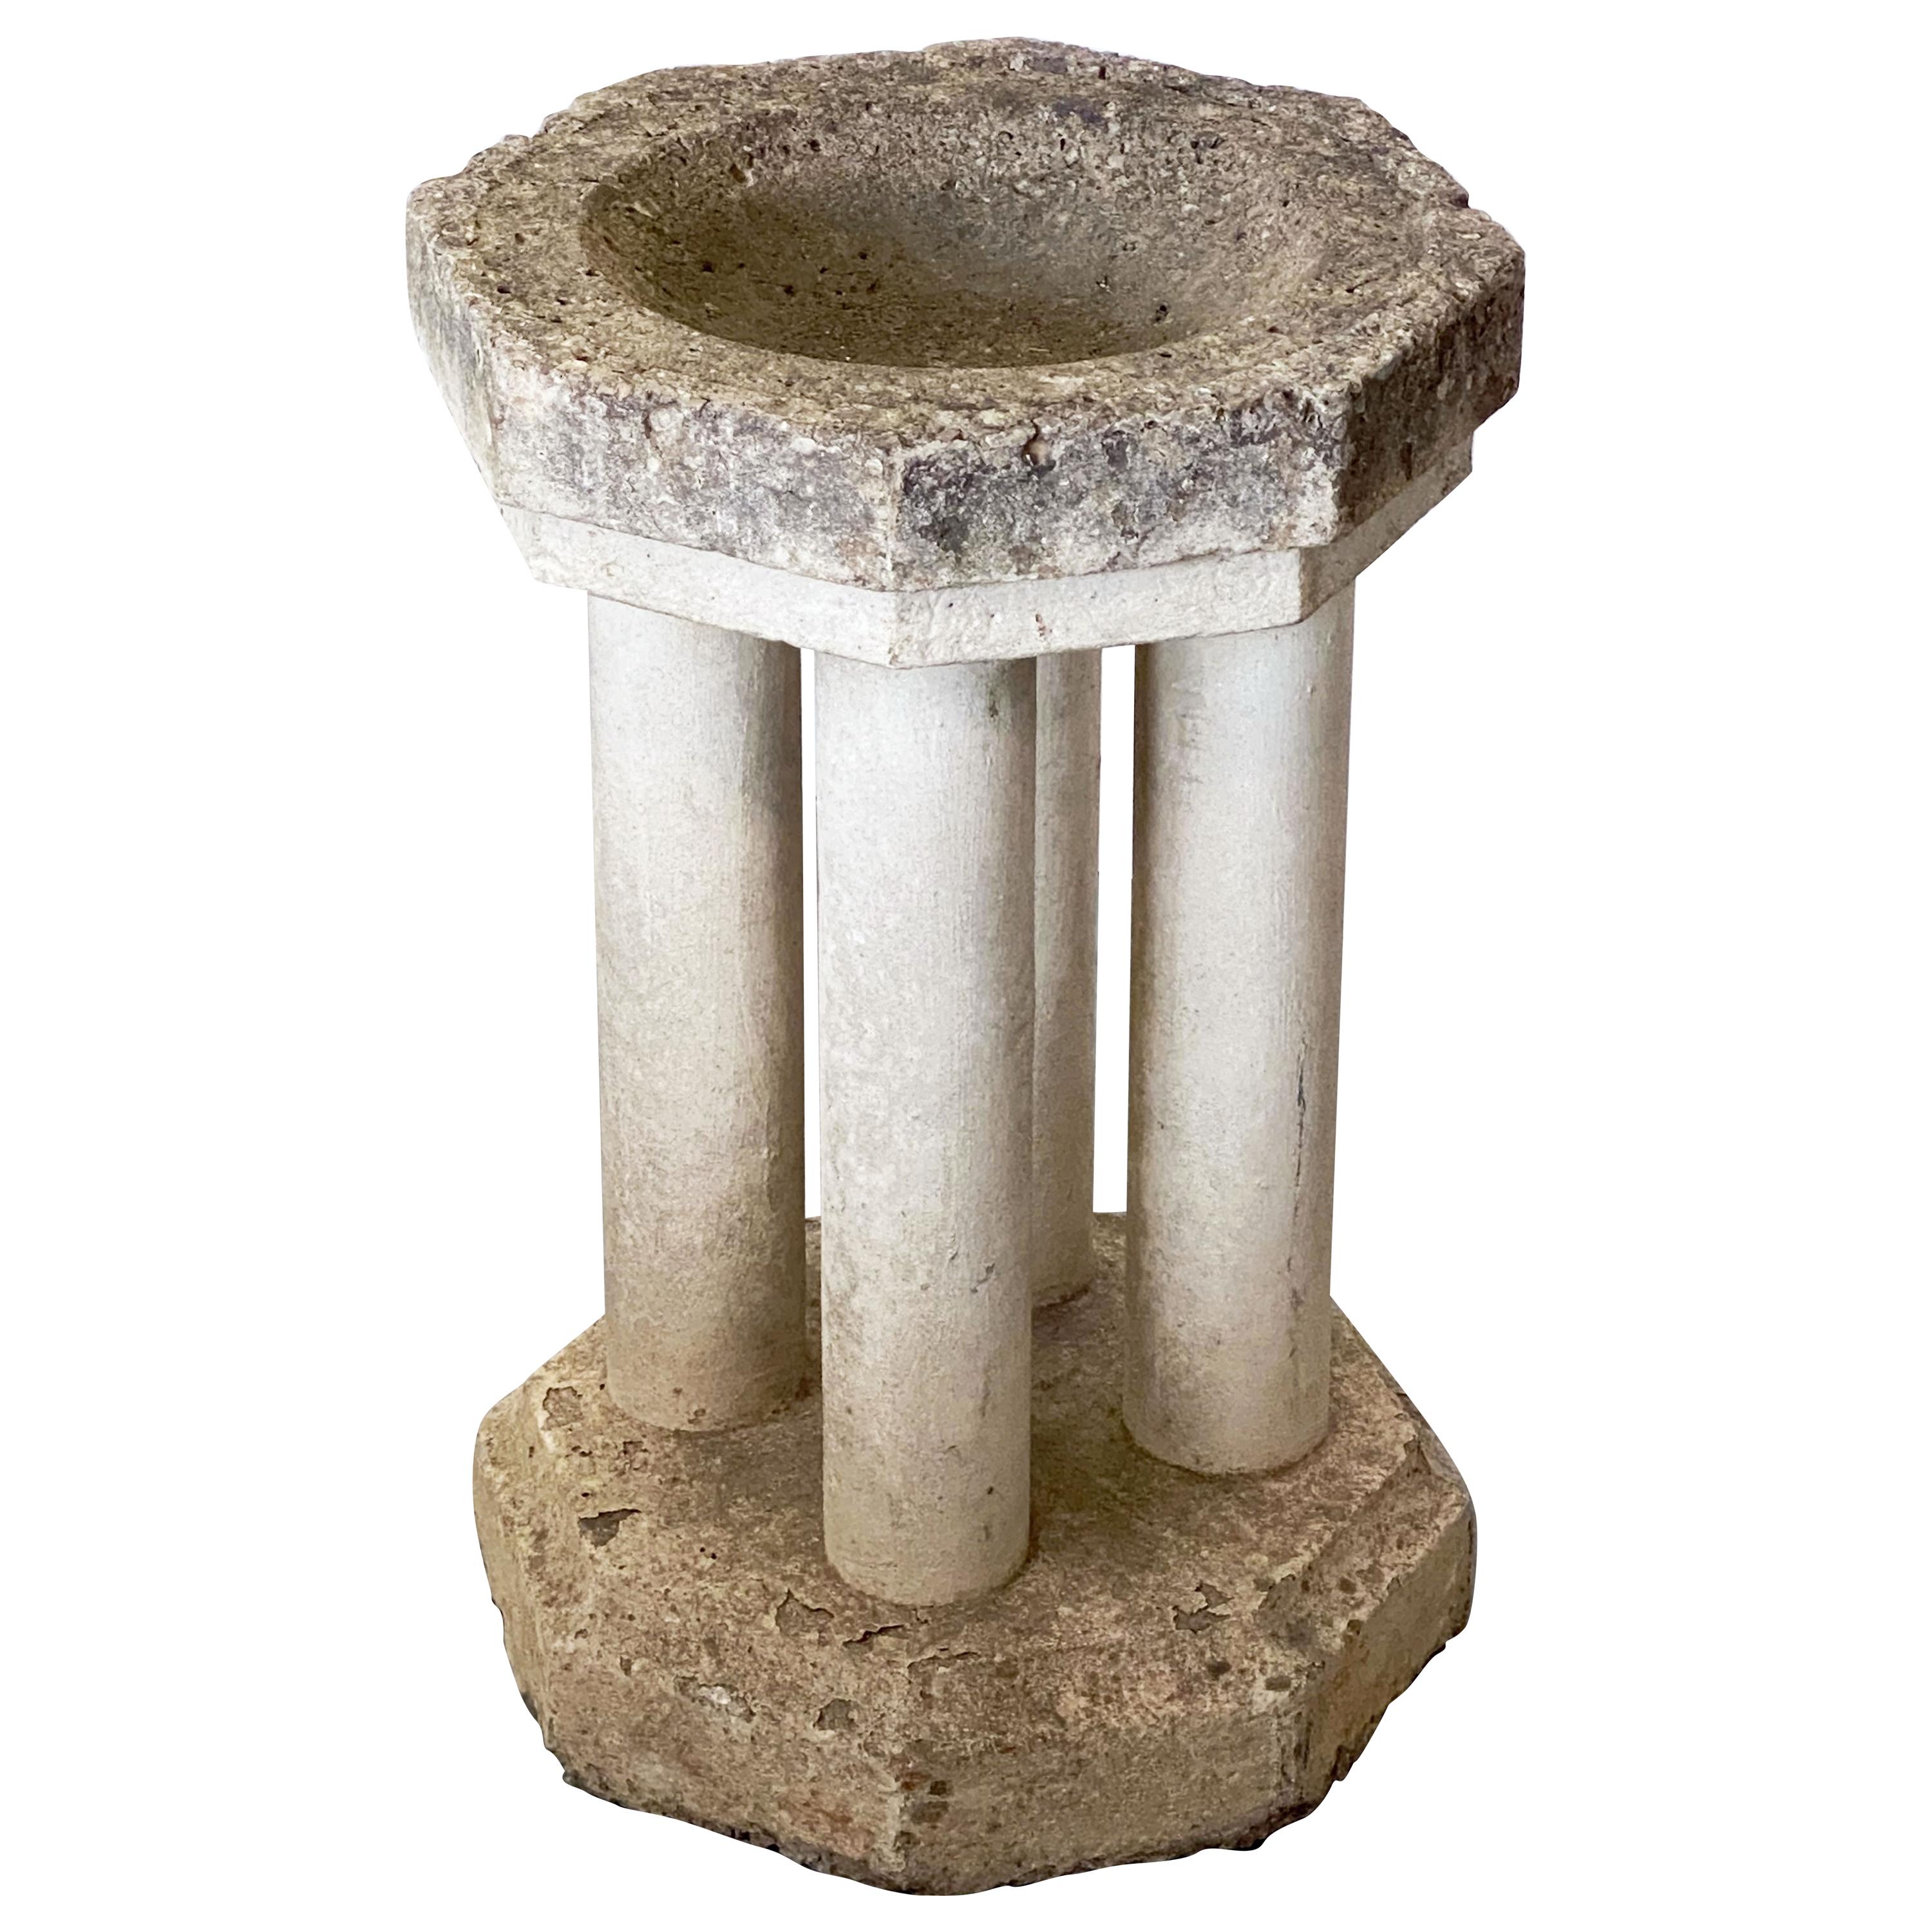 English Octagonal Garden Stone Bird Bath or Font with Column Supports